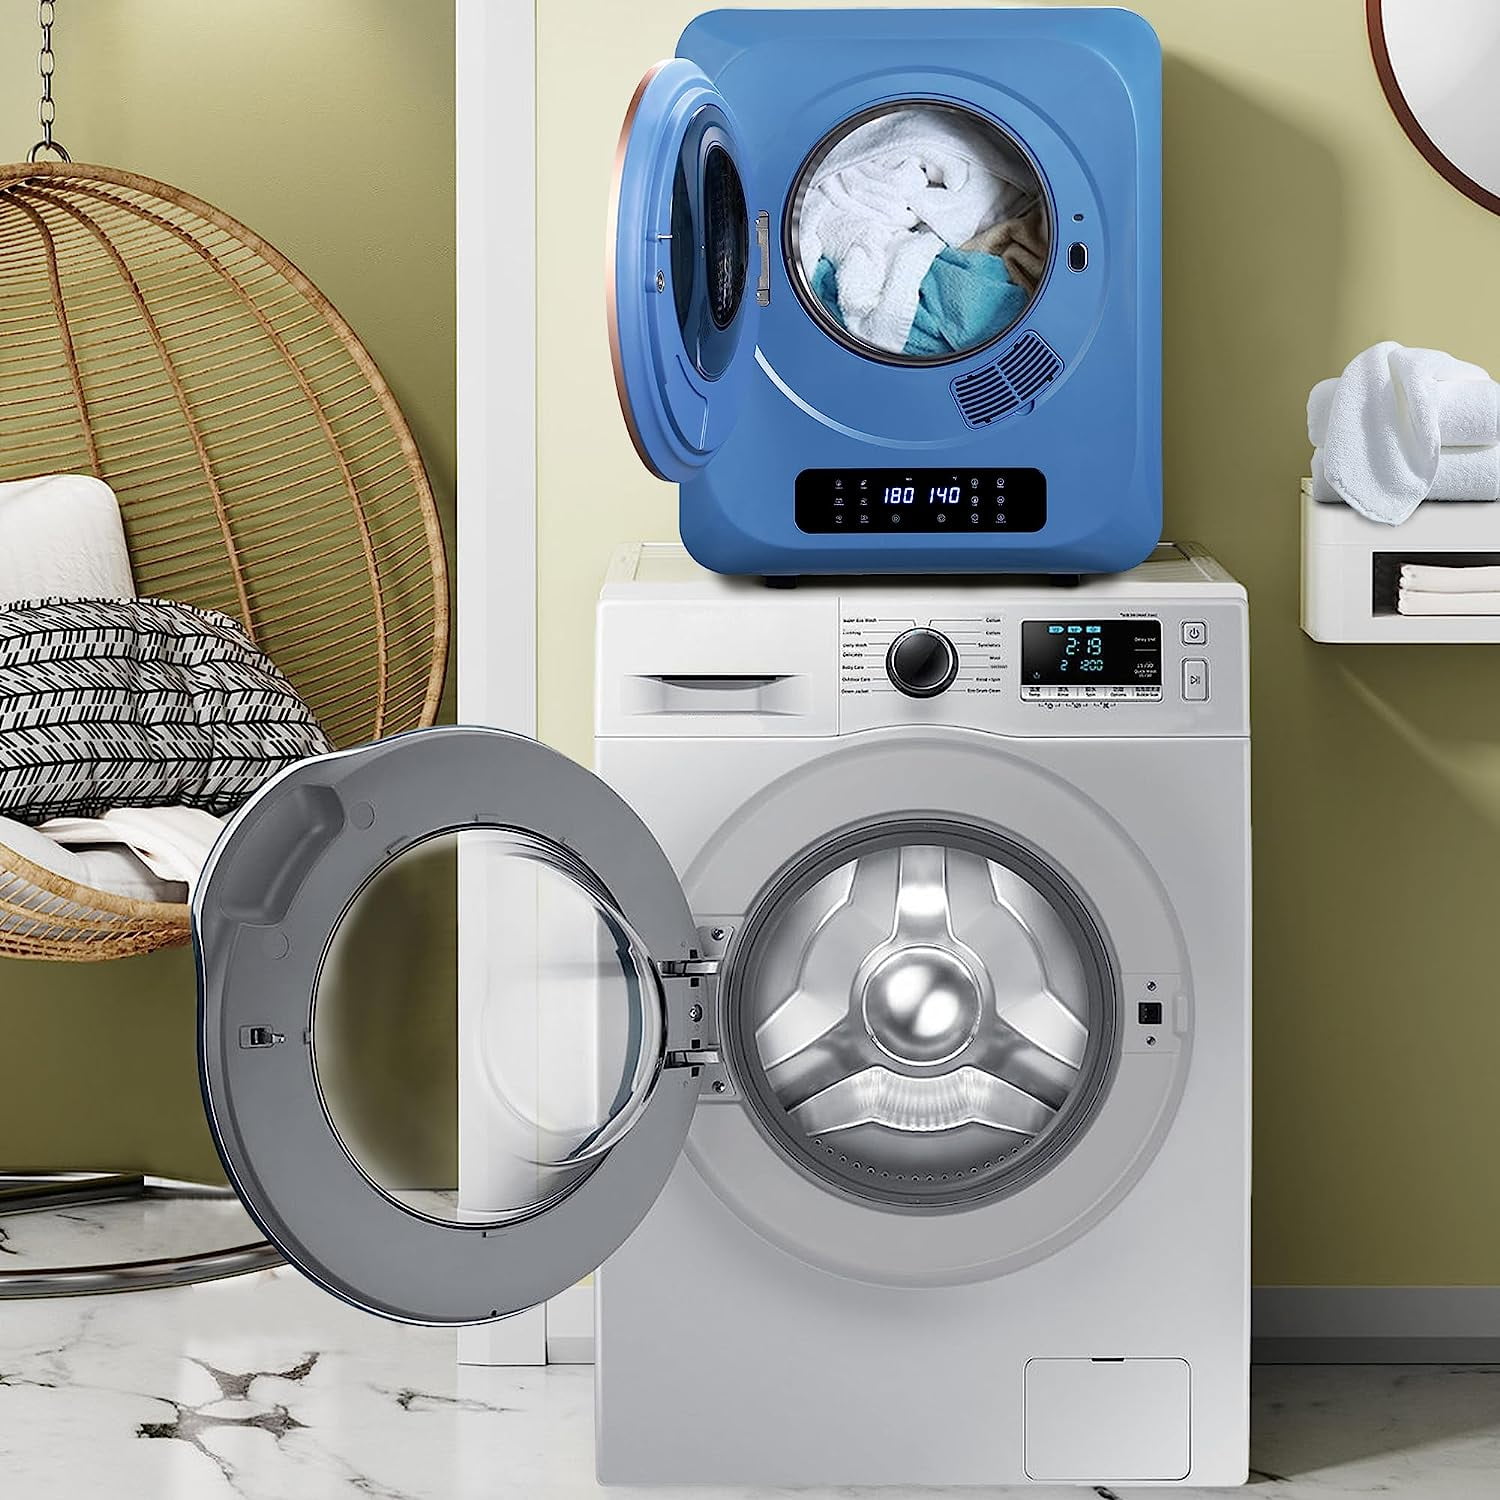 Lingouzi Portable Clothes Dryer, Electric Clothes and Shoe Dryer